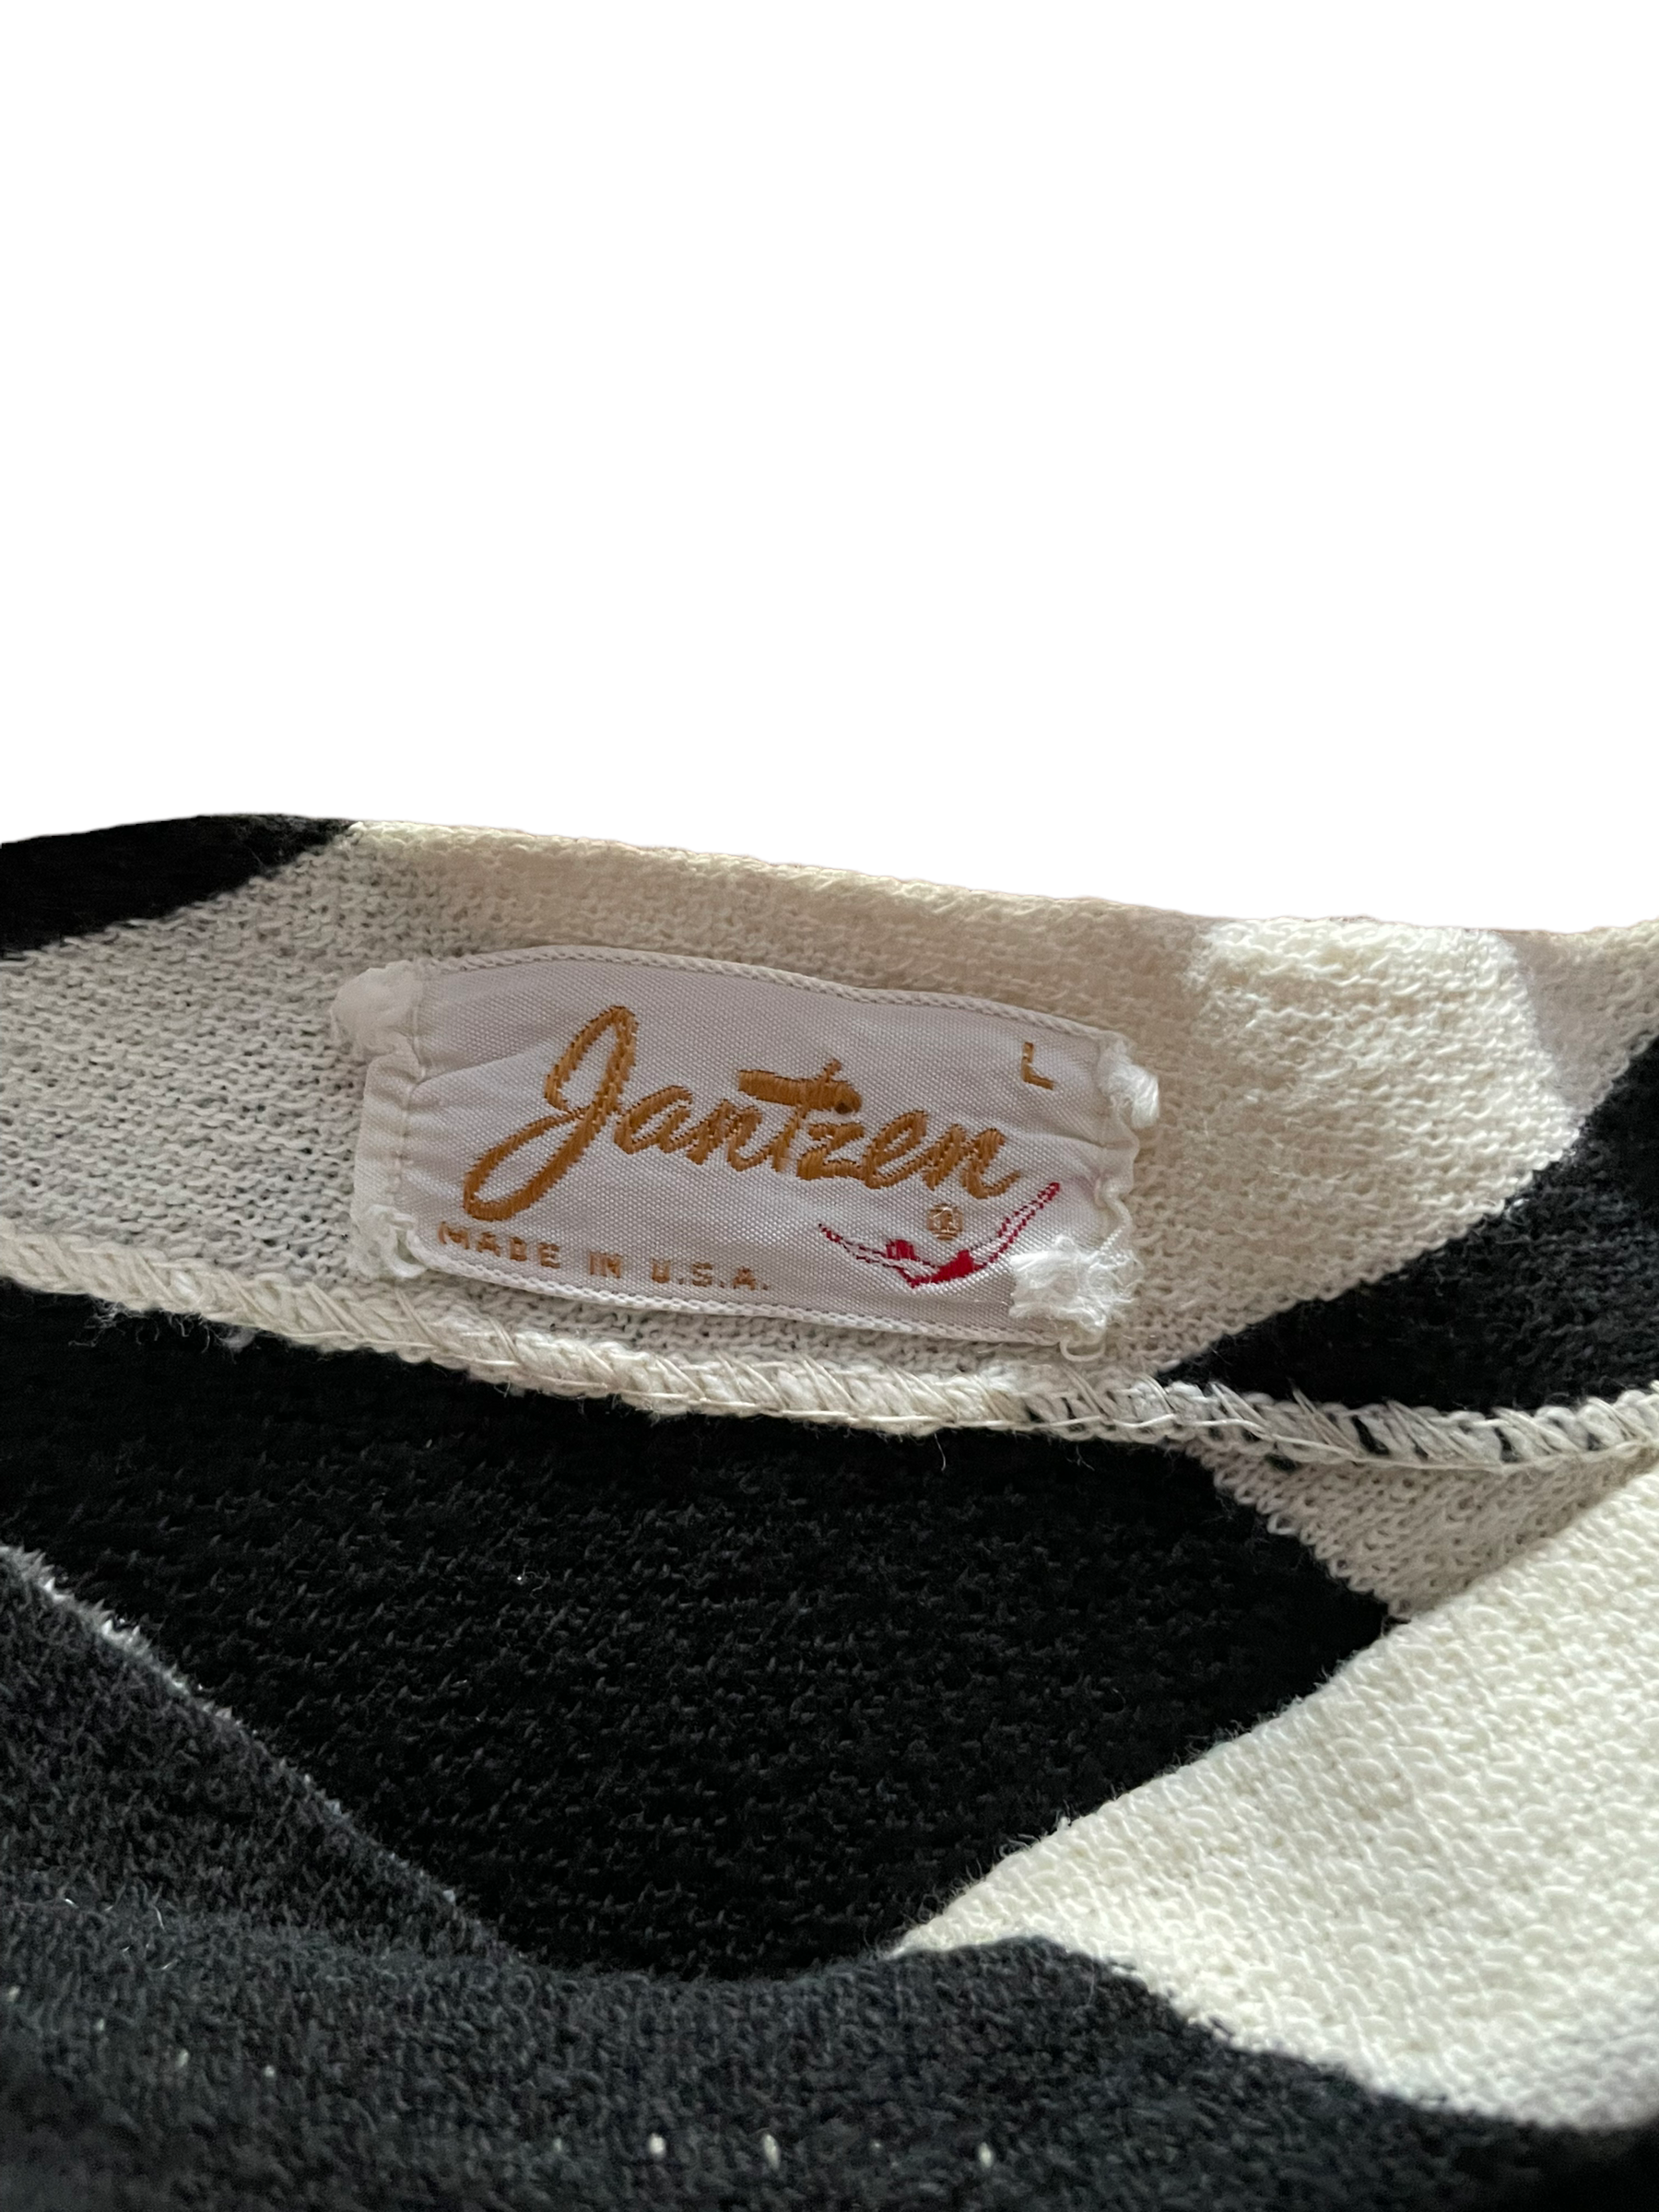 View of jantzen label Vintage 1950s Jantzen Striped Top | Barn Owl Seattle | Vintage Jantzen Clothing